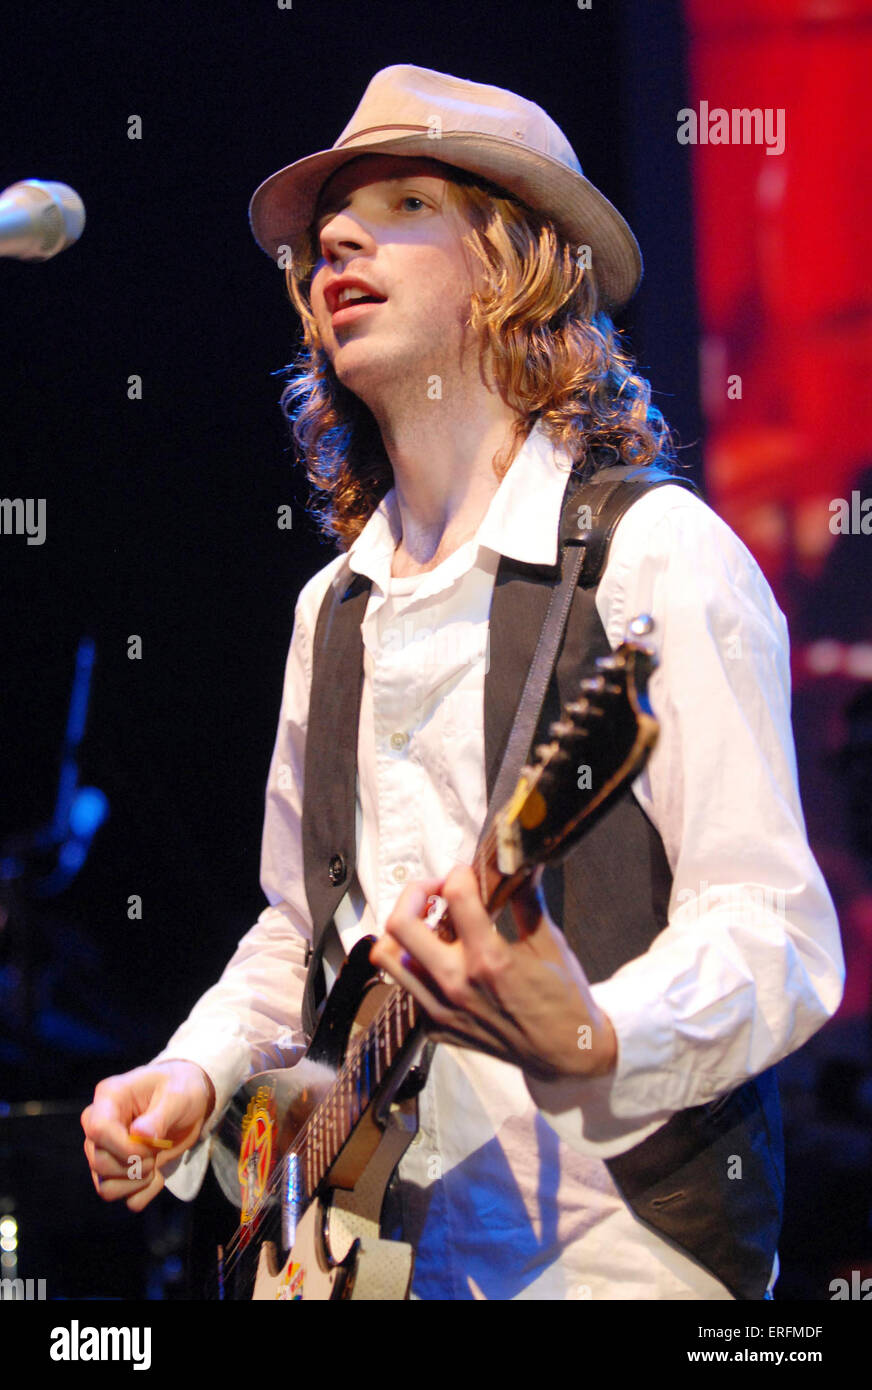 Beck - American singer, songwriter and musician performing at the Somerset House, London, UK, 2 September 2006. Born Bek David Stock Photo